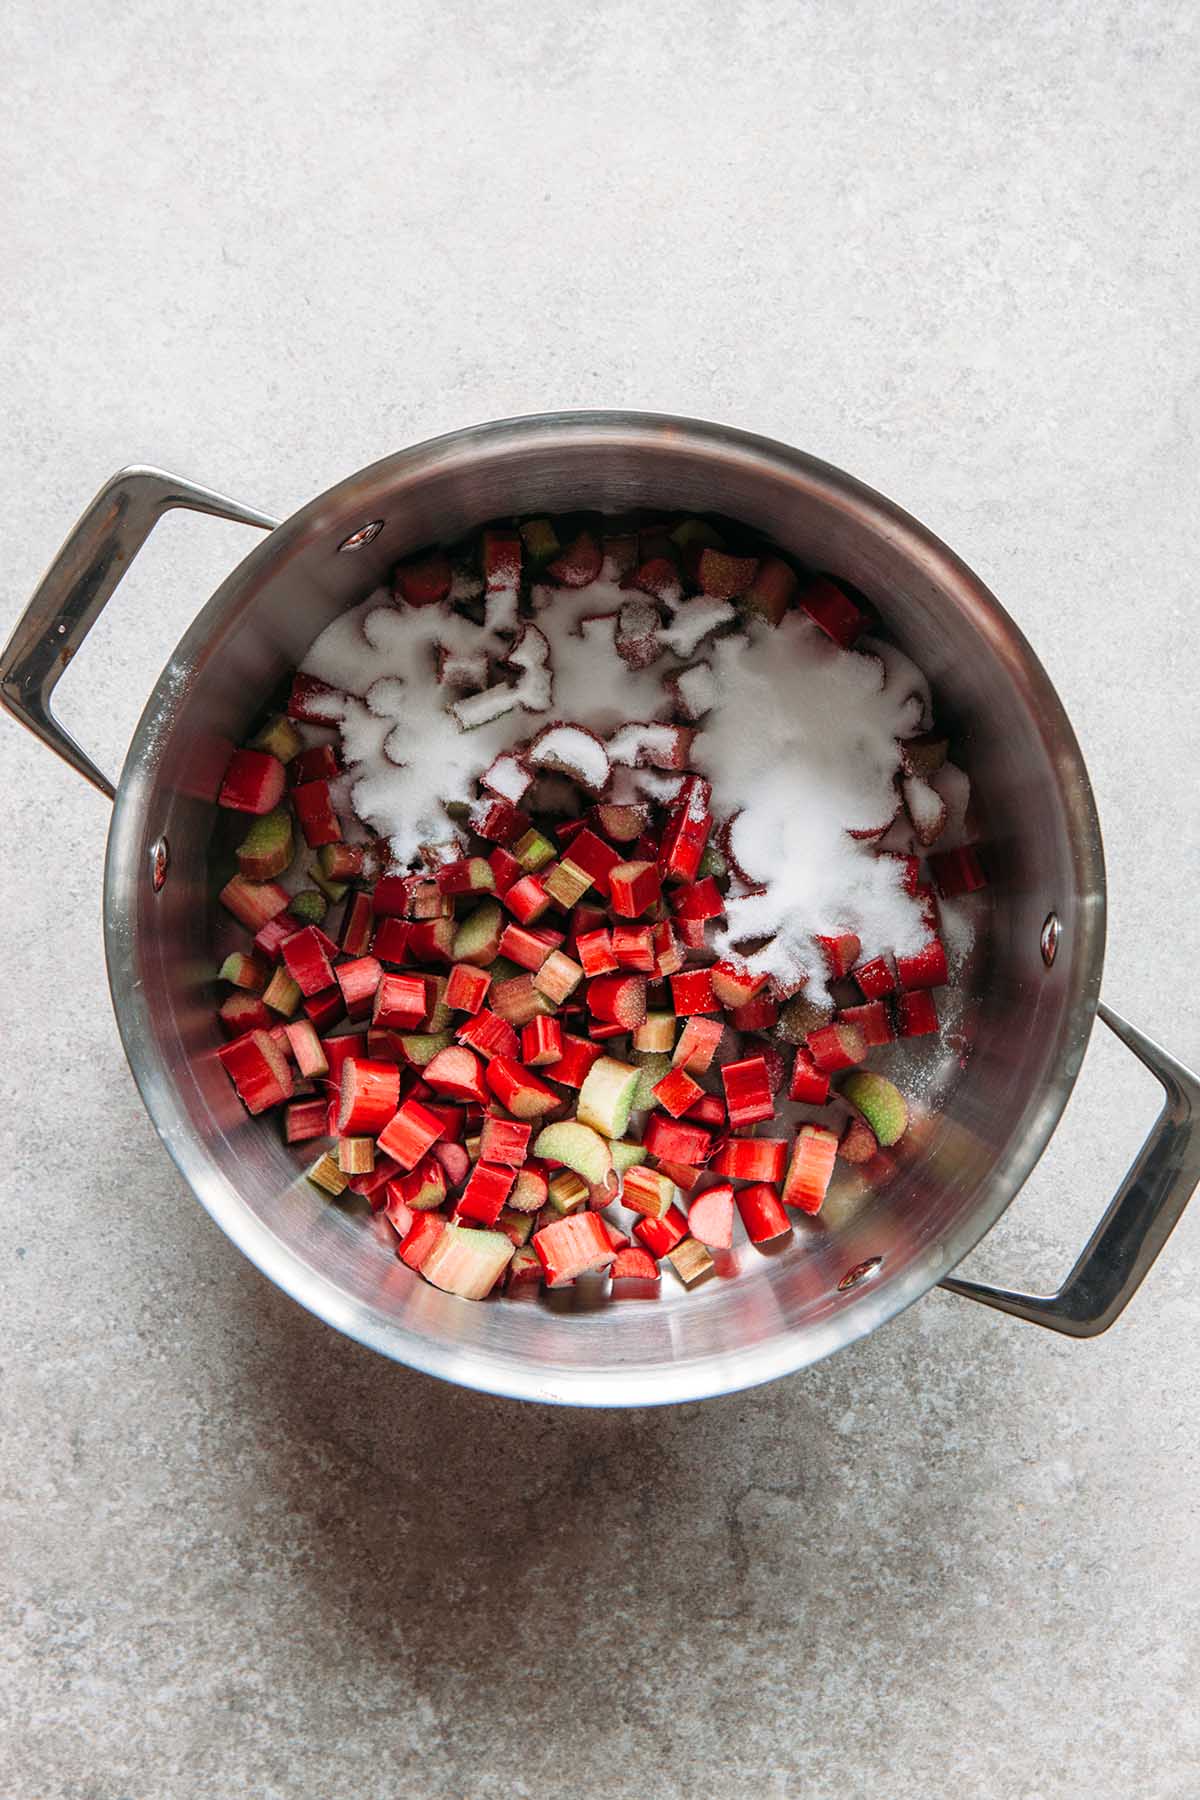 Chopped rhubarb and sugar in a pot.